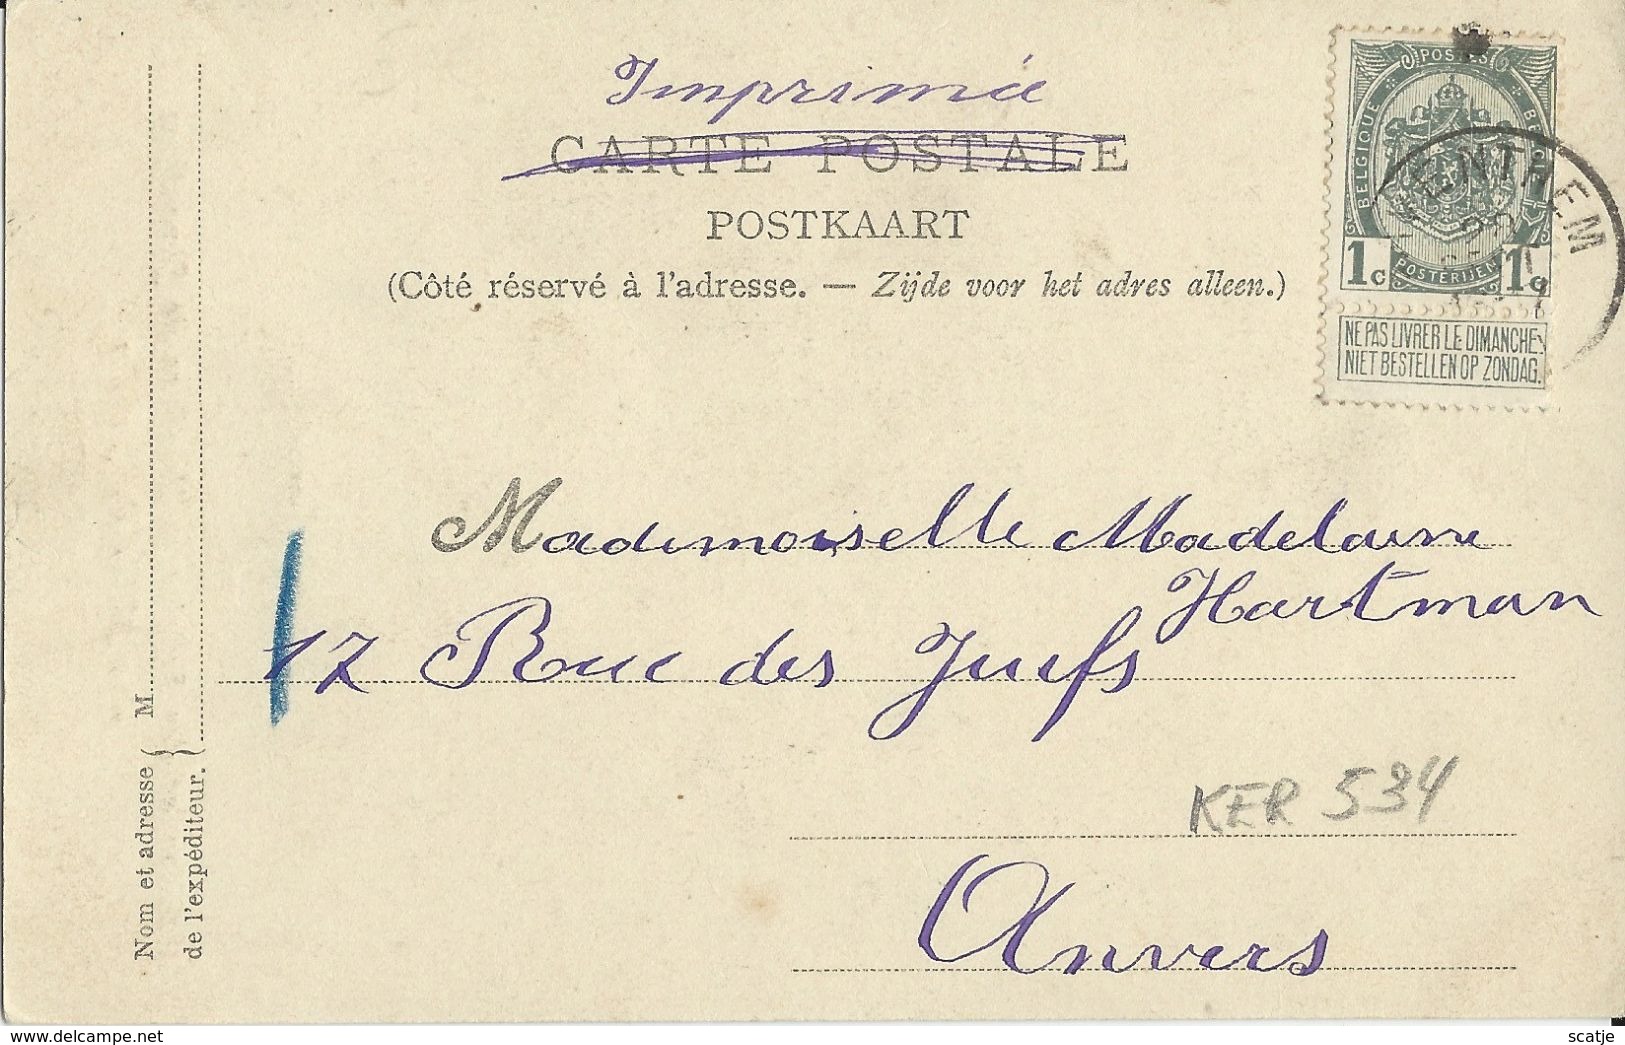 Saventhem     Pensionnat Des Religeuses Ursulines   -   1900 - Zaventem